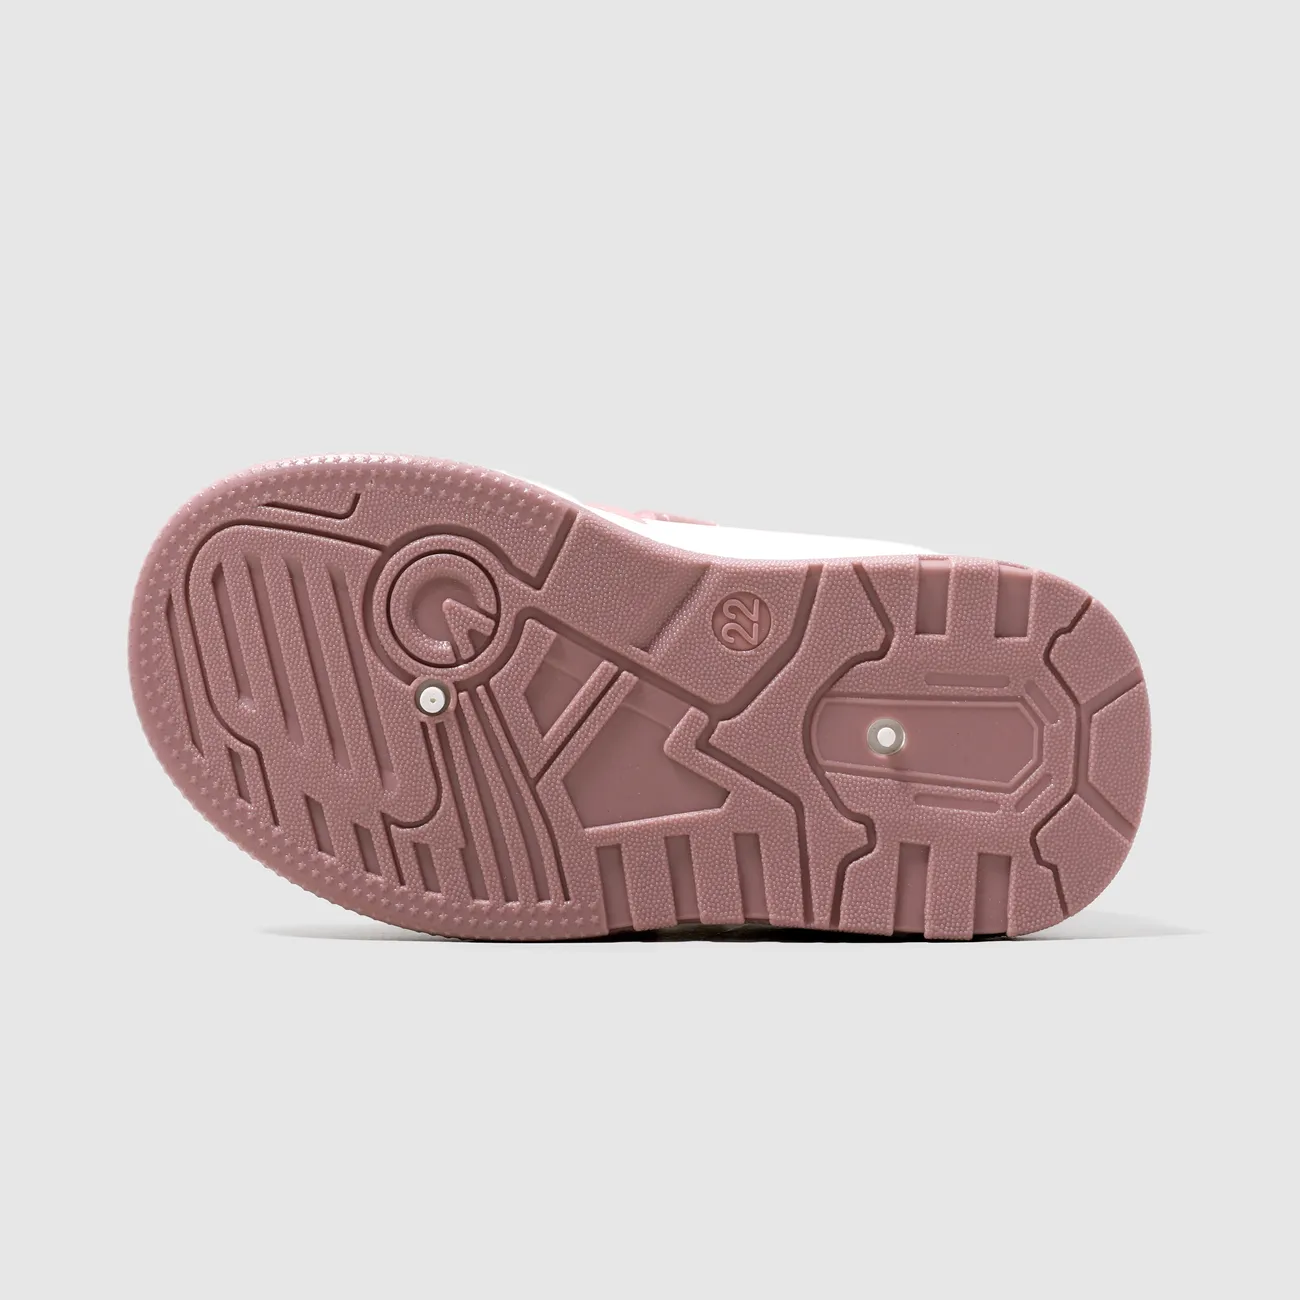 Toddler/Kids Girl/Boy Hyper-Tactile 3D Panda Pattern Velcro Sports Shoes Pink big image 1